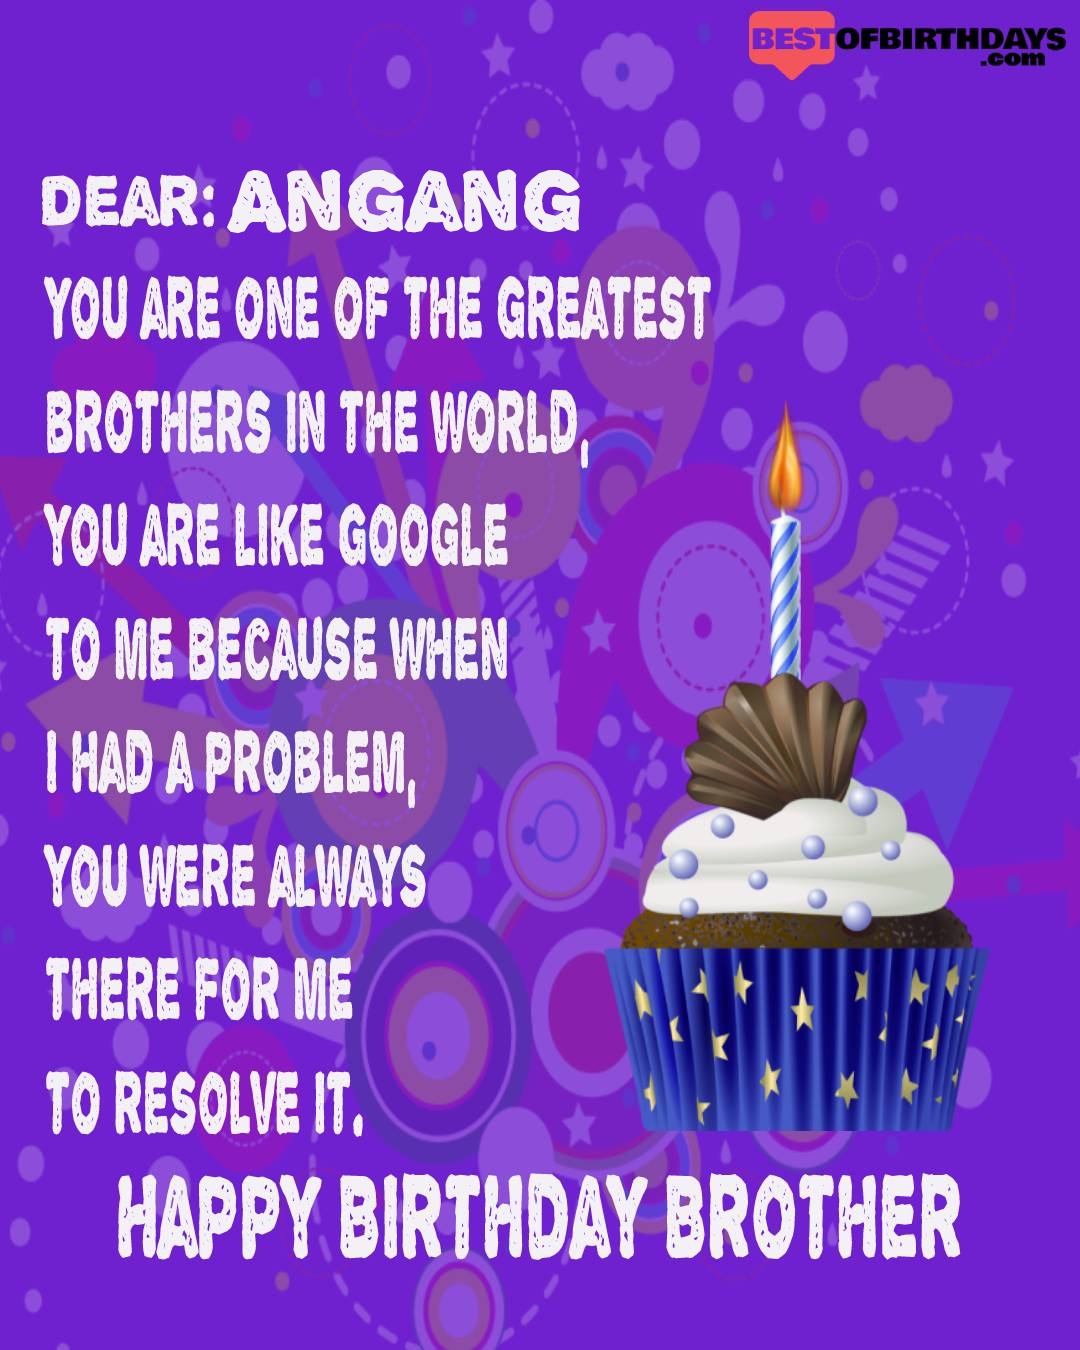 Happy birthday angang bhai brother bro